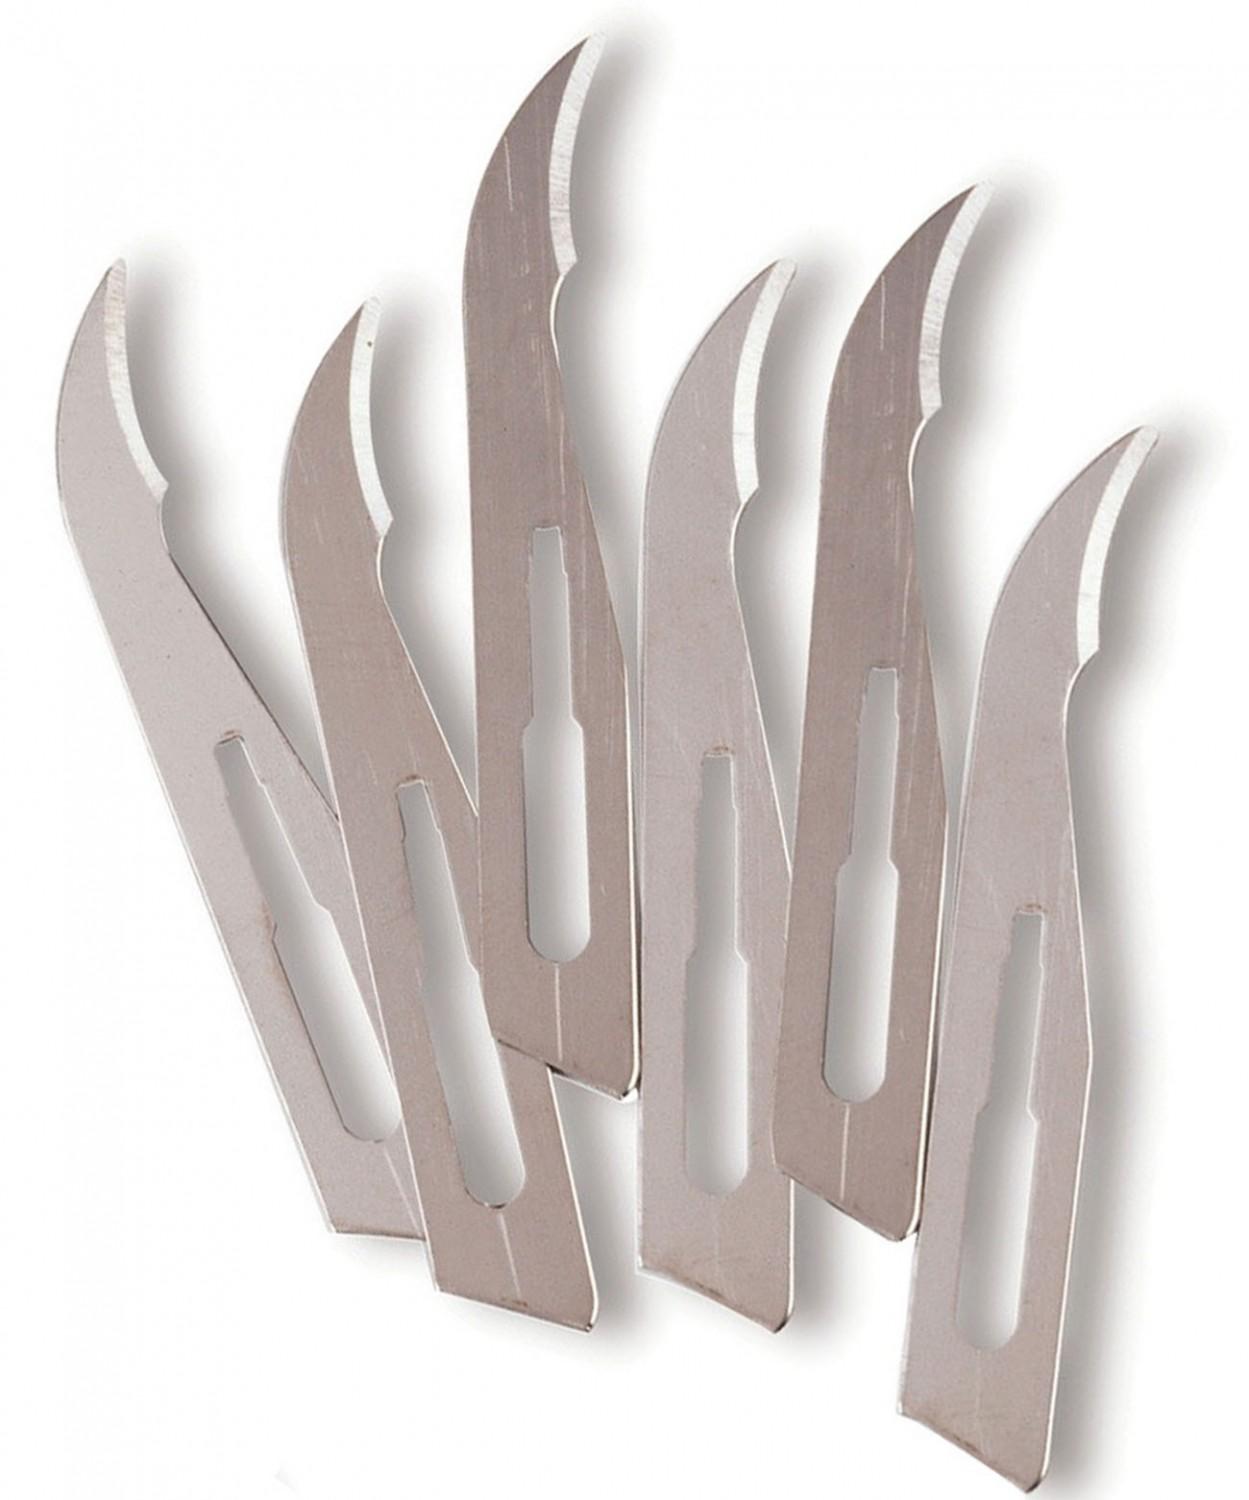 Seam Ripper Replacement Blades*